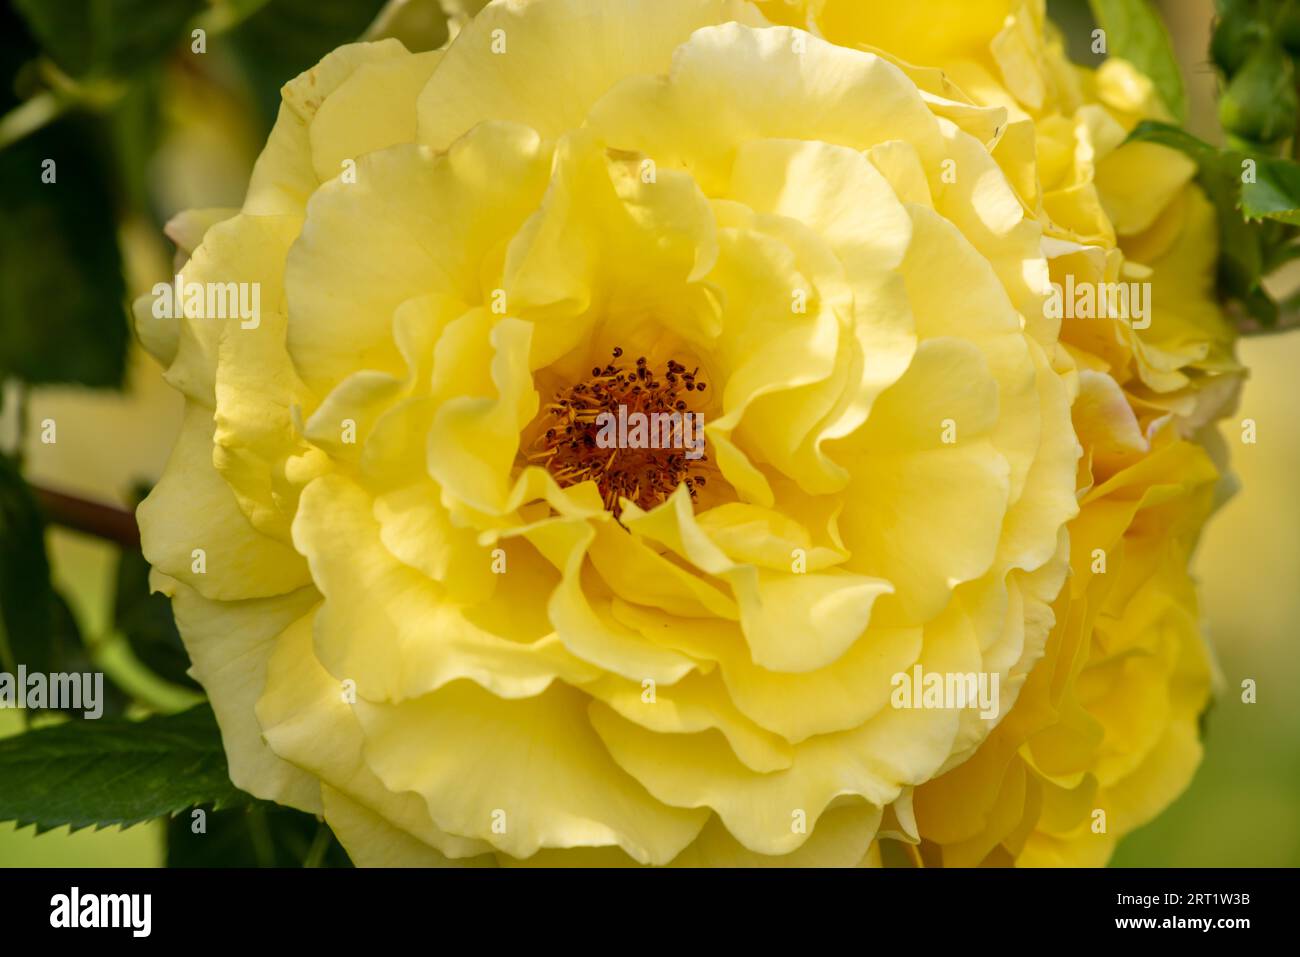 Gold Rose in full bloom Stock Photo